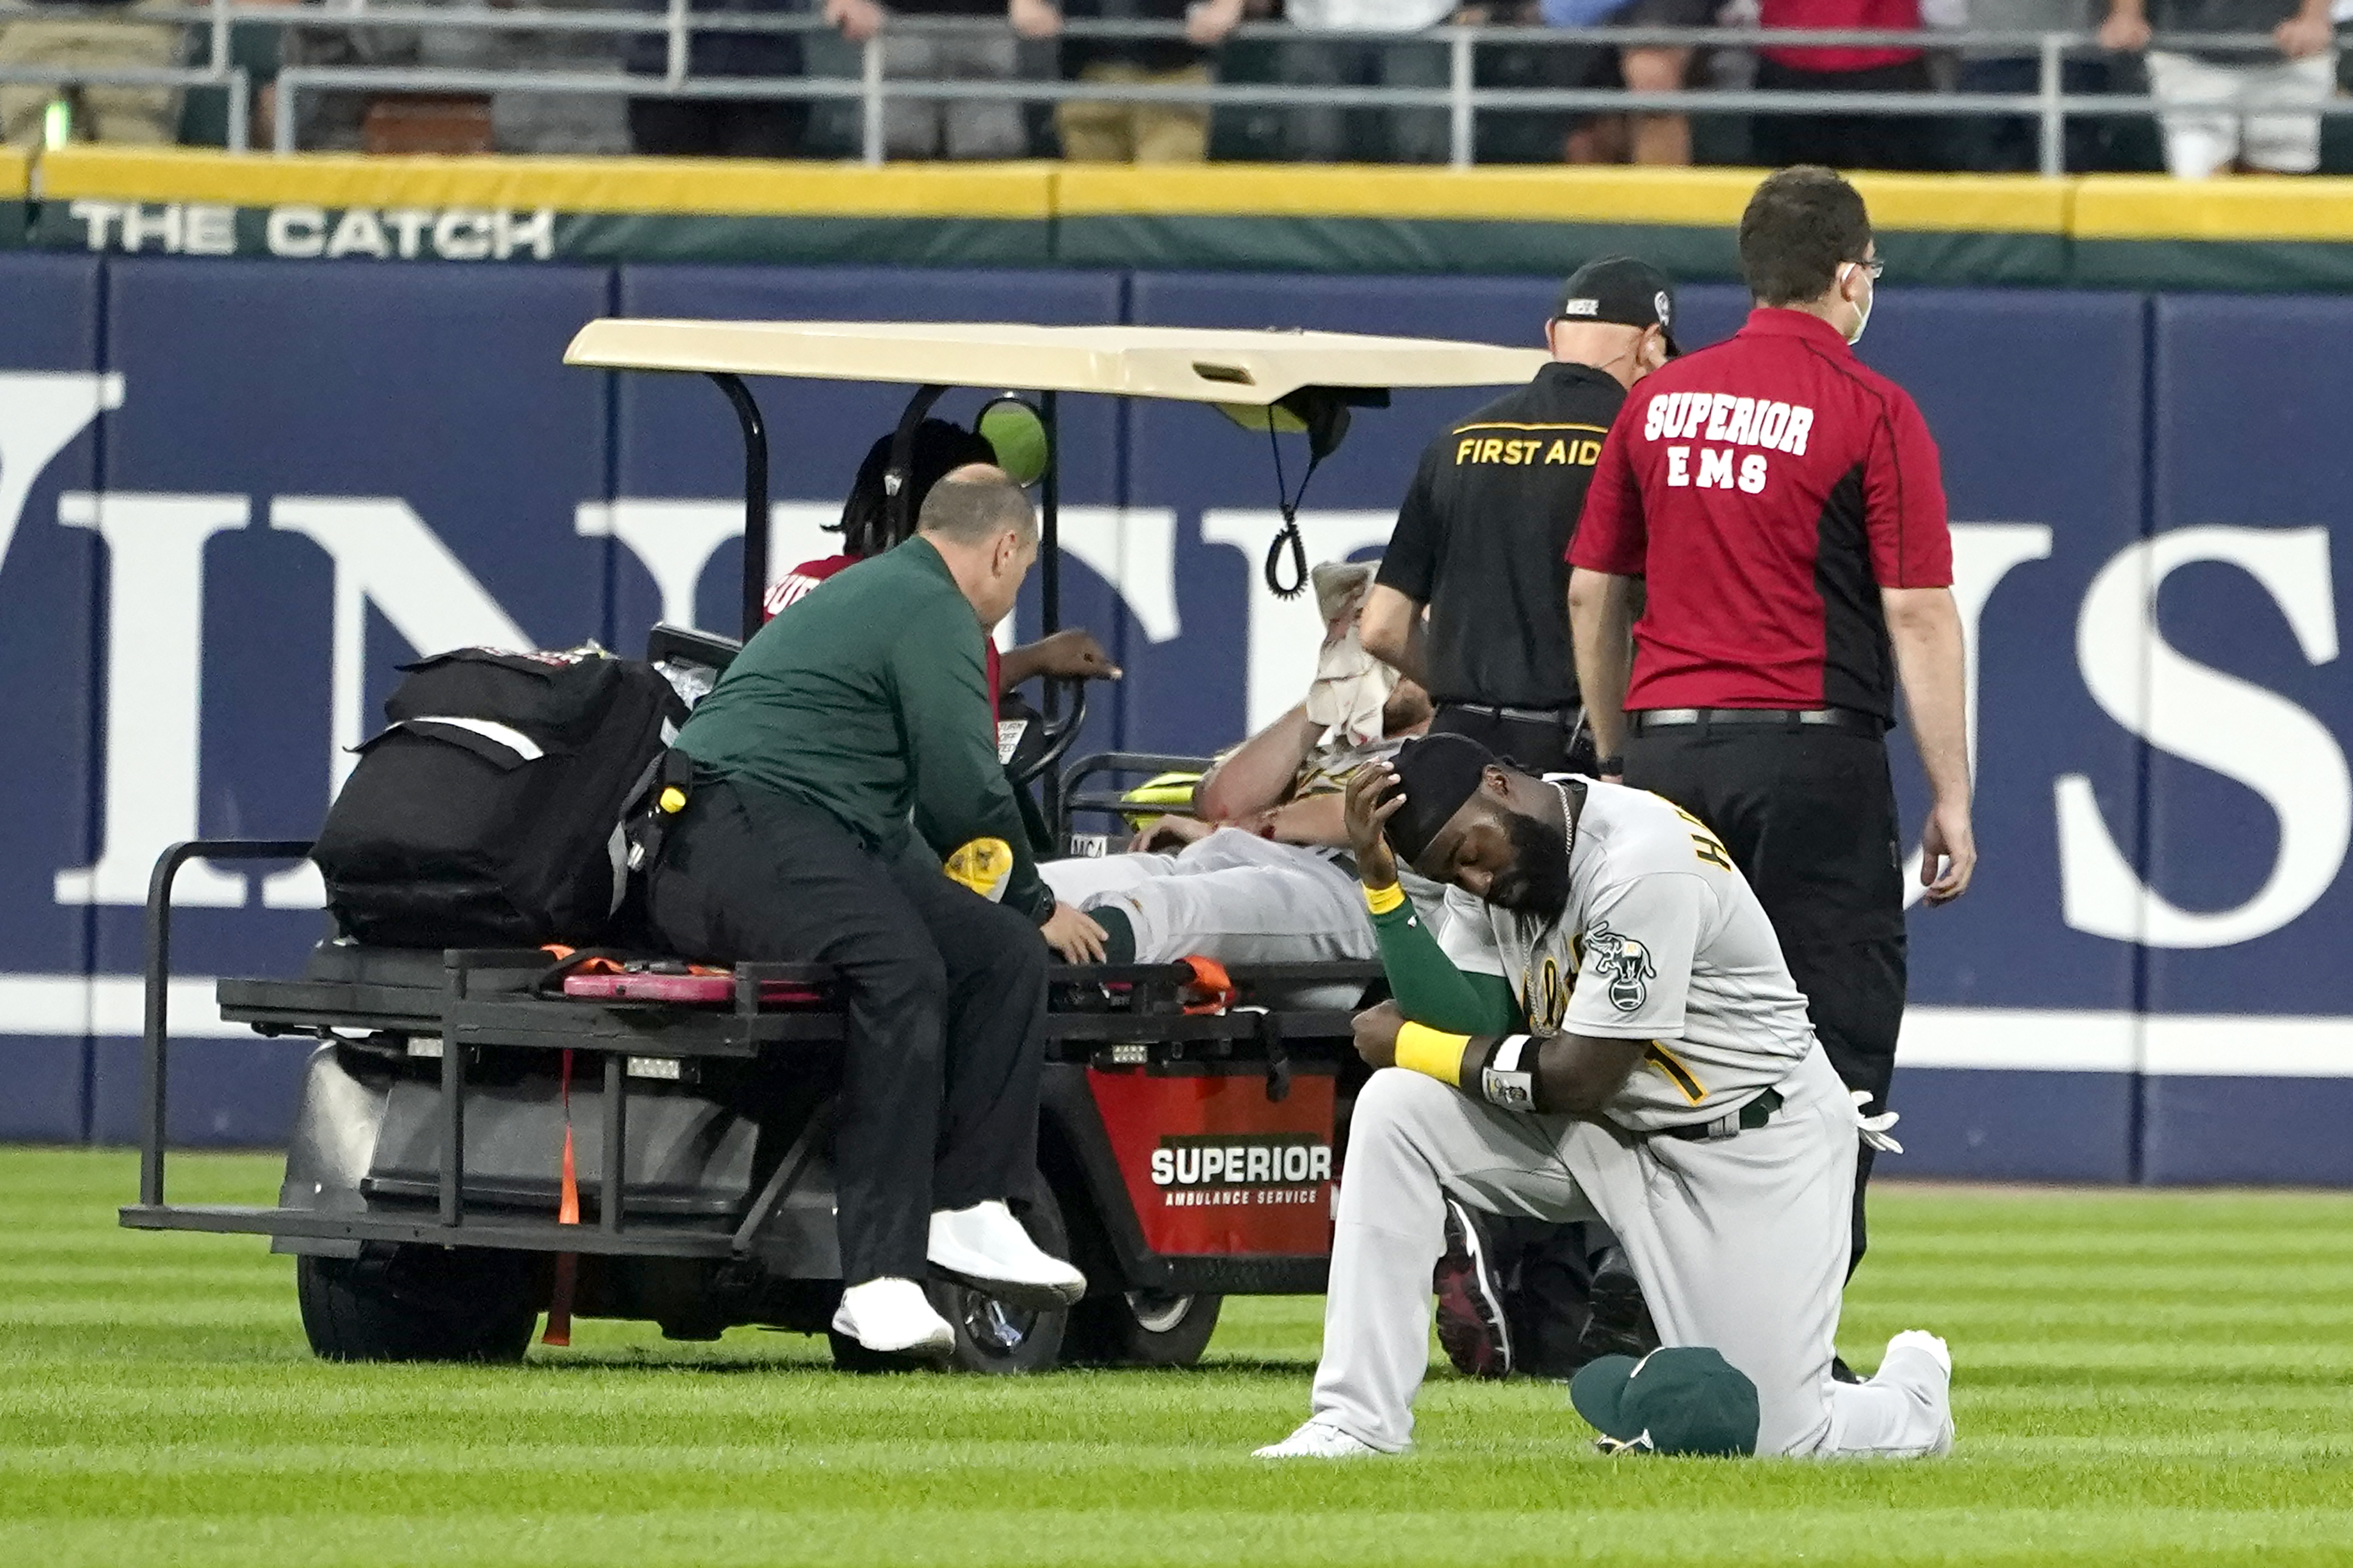 MLB news: Oakland pitcher Chris Bassitt struck in the face against